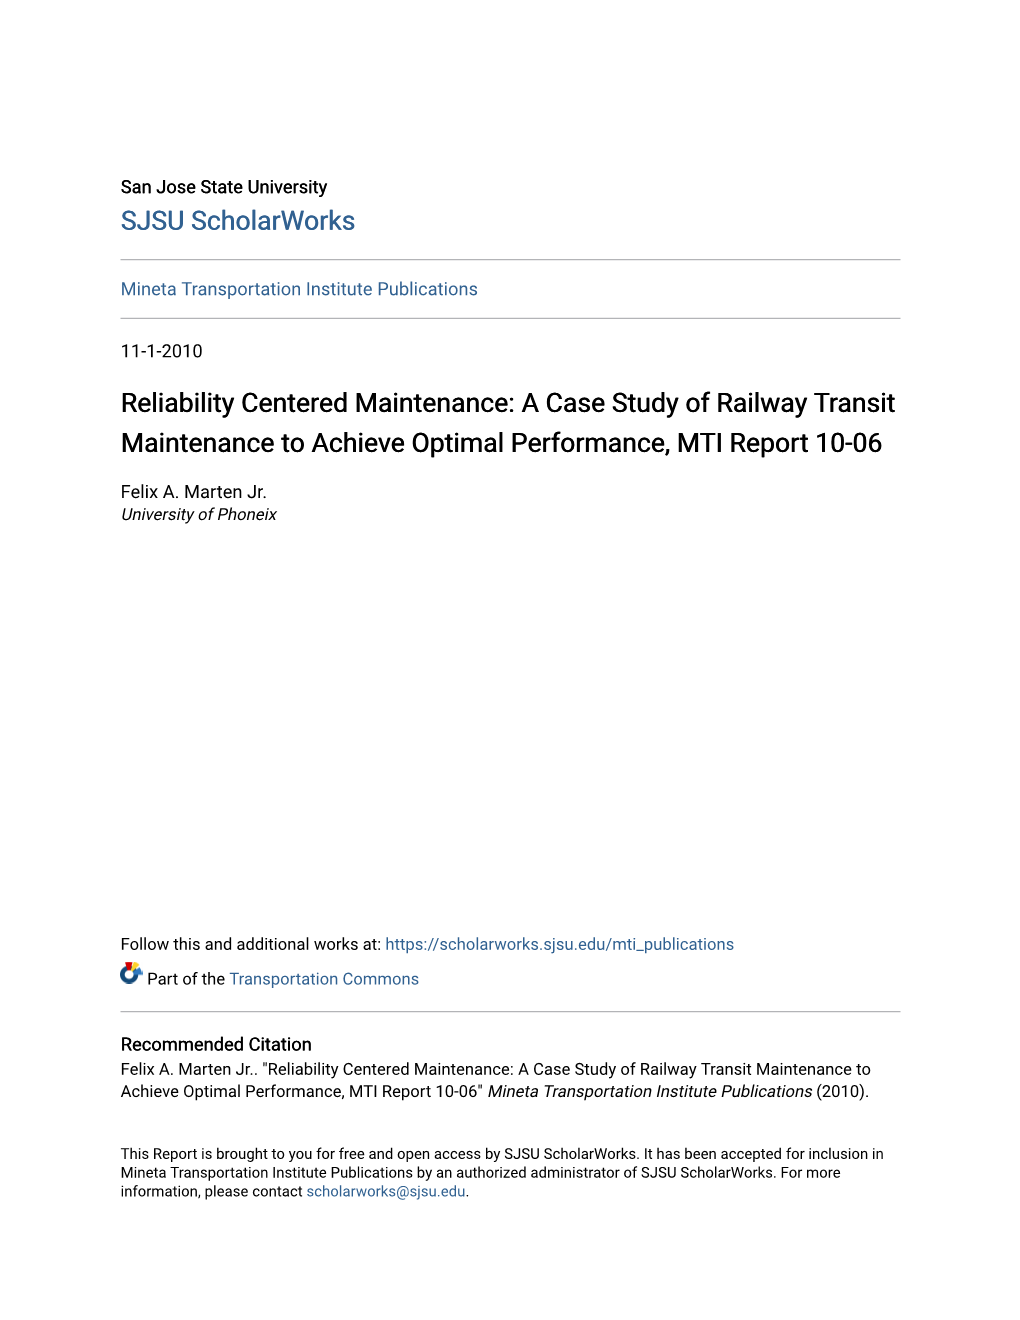 Reliability Centered Maintenance: a Case Study of Railway Transit Maintenance to Achieve Optimal Performance, MTI Report 10-06